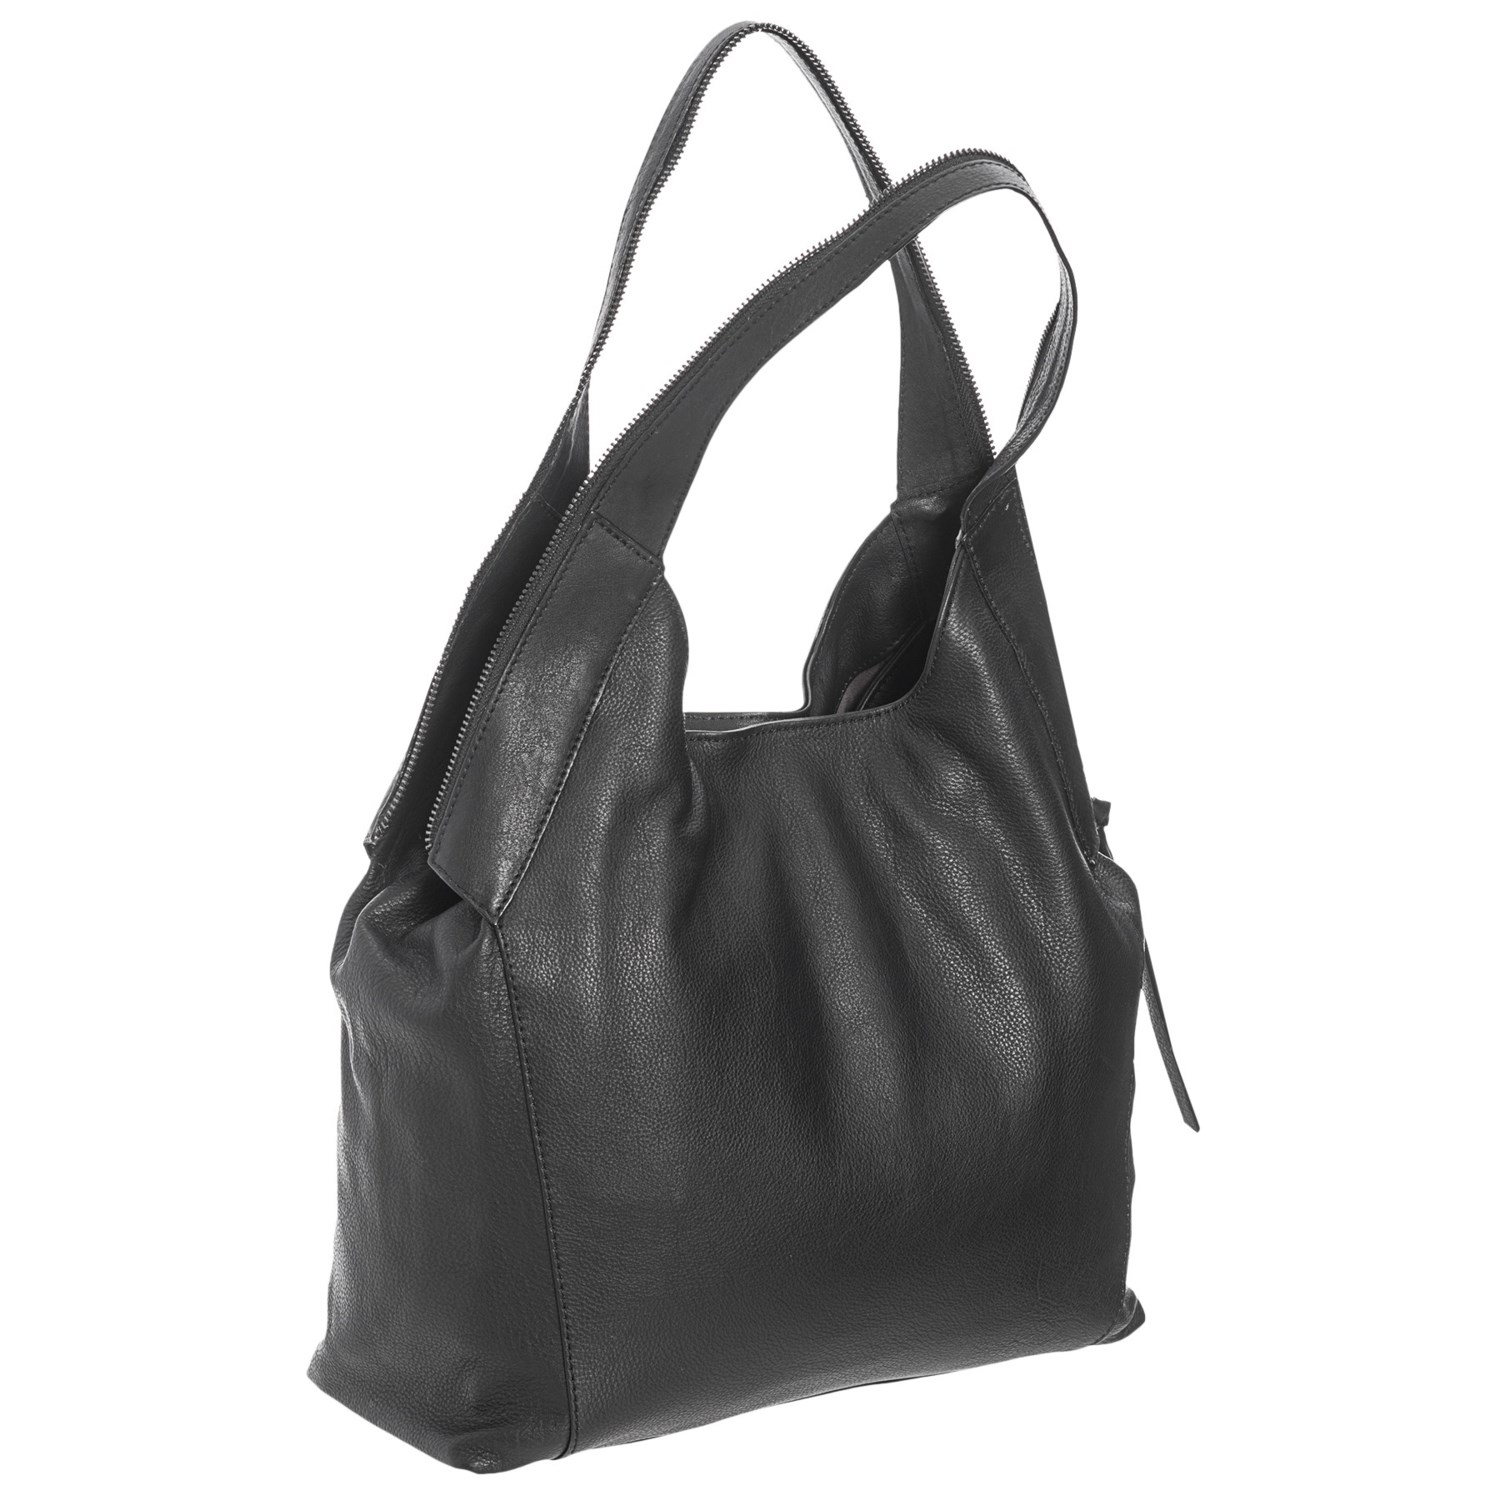 Kooba Oakland Hobo Bag (For Women) - Save 64%